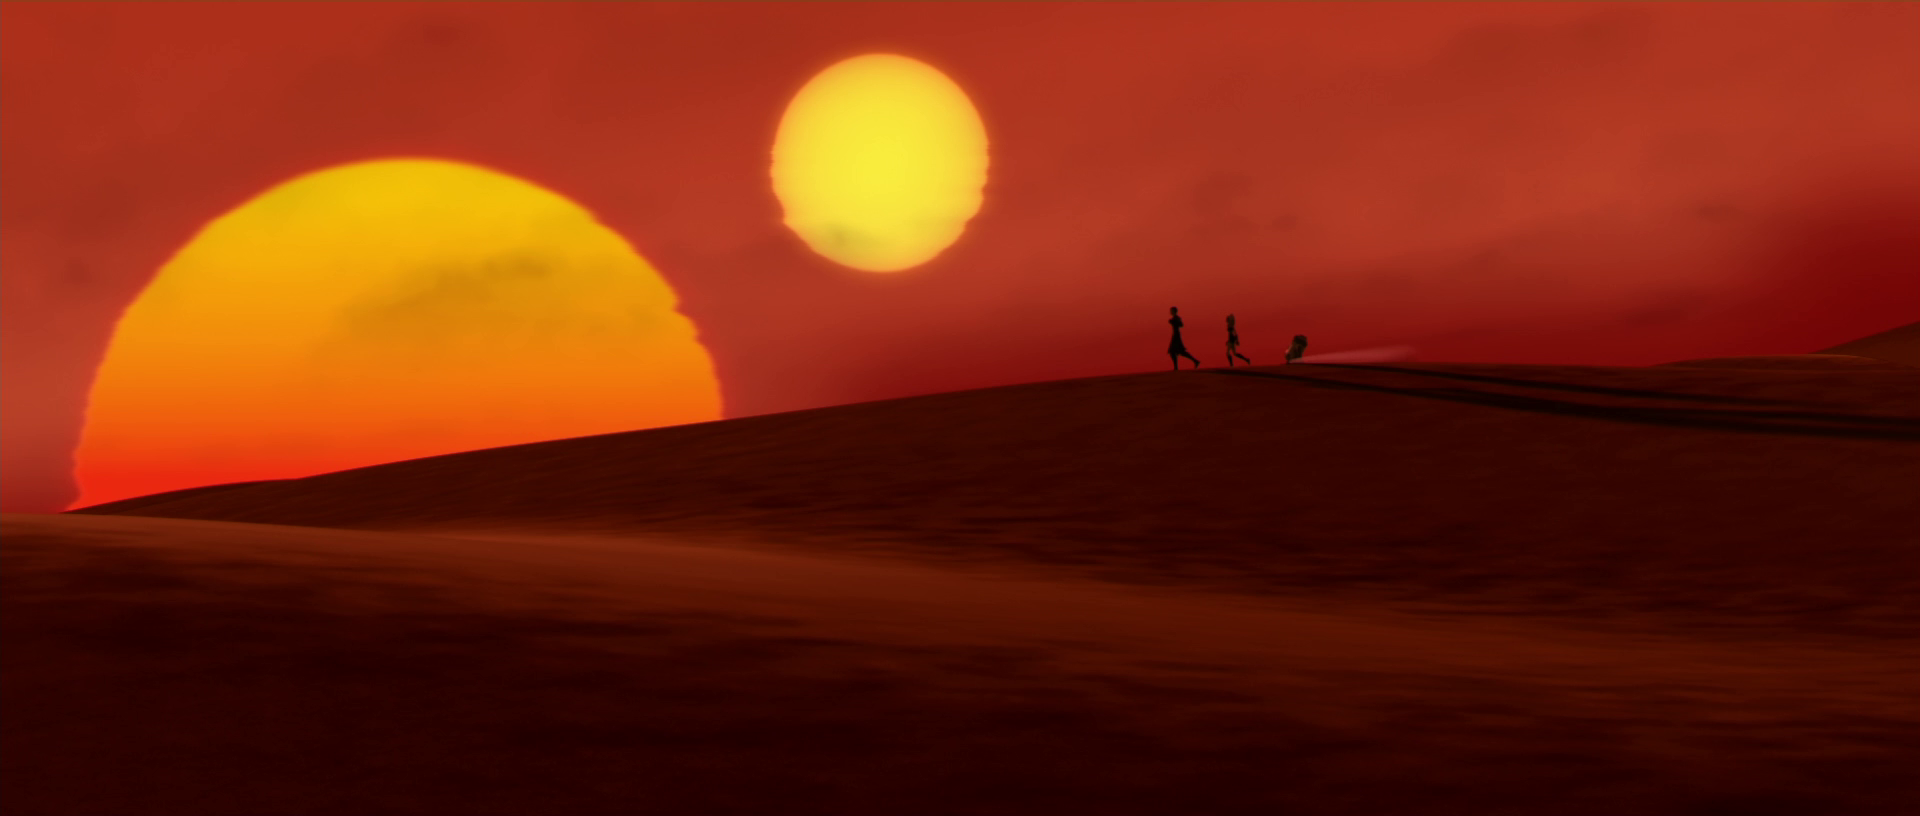 Закат остановился. Звёздные войны Татуин пустыня. Татуин 2 солнца. Clone Wars Татуин. Звездные войны Татуин два солнца.